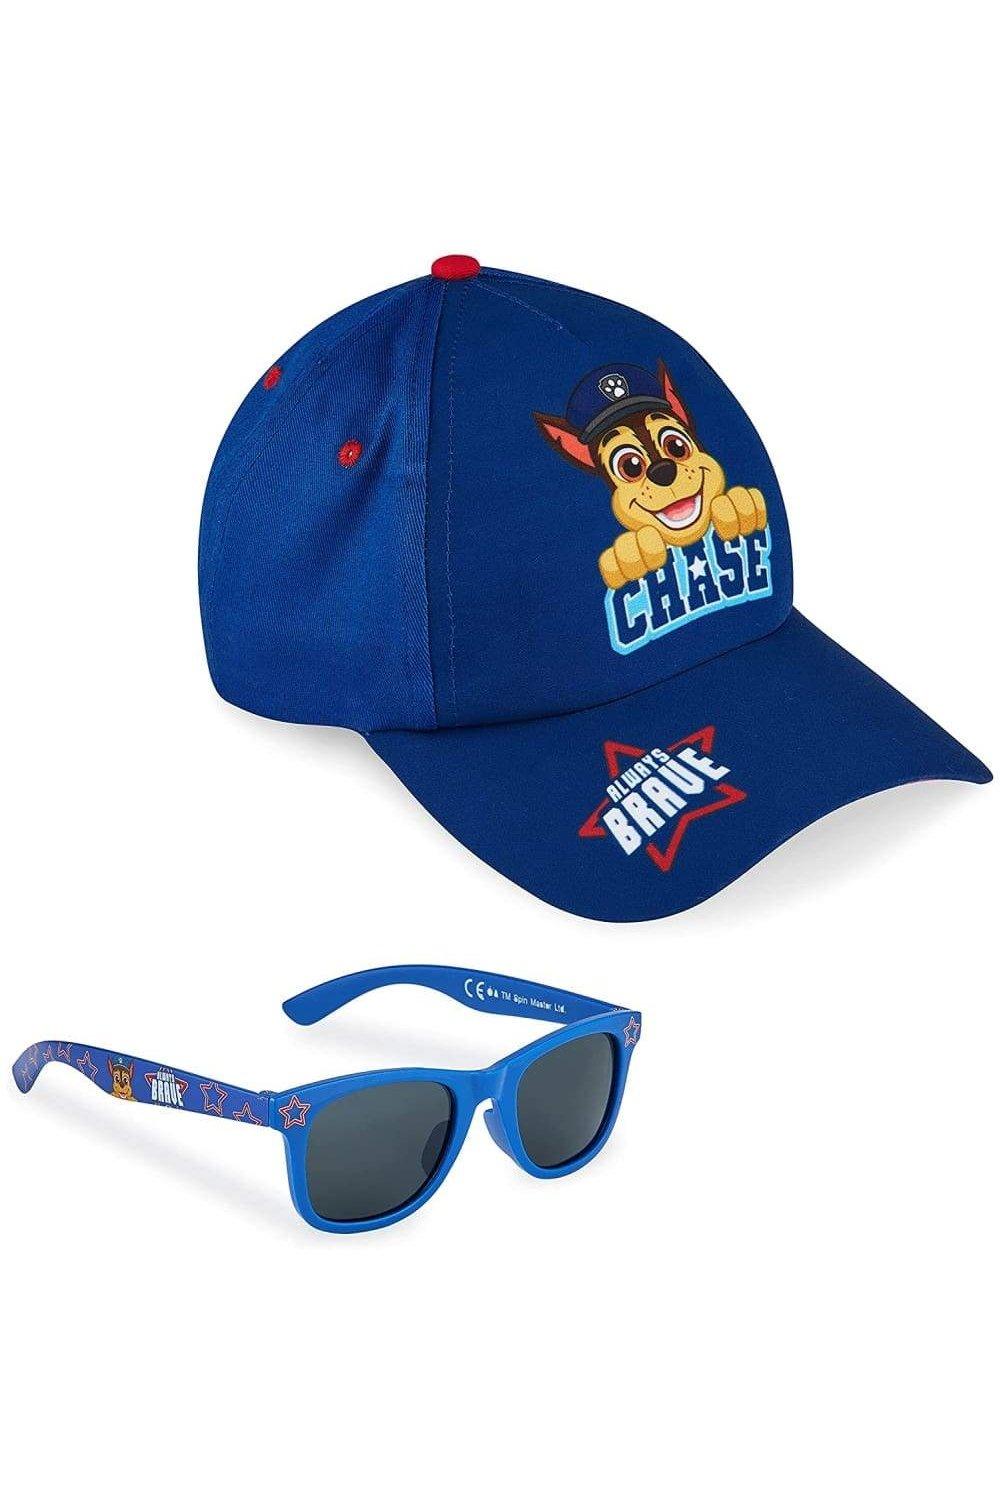 Бейсболка и солнцезащитные очки Chase Paw Patrol, синий